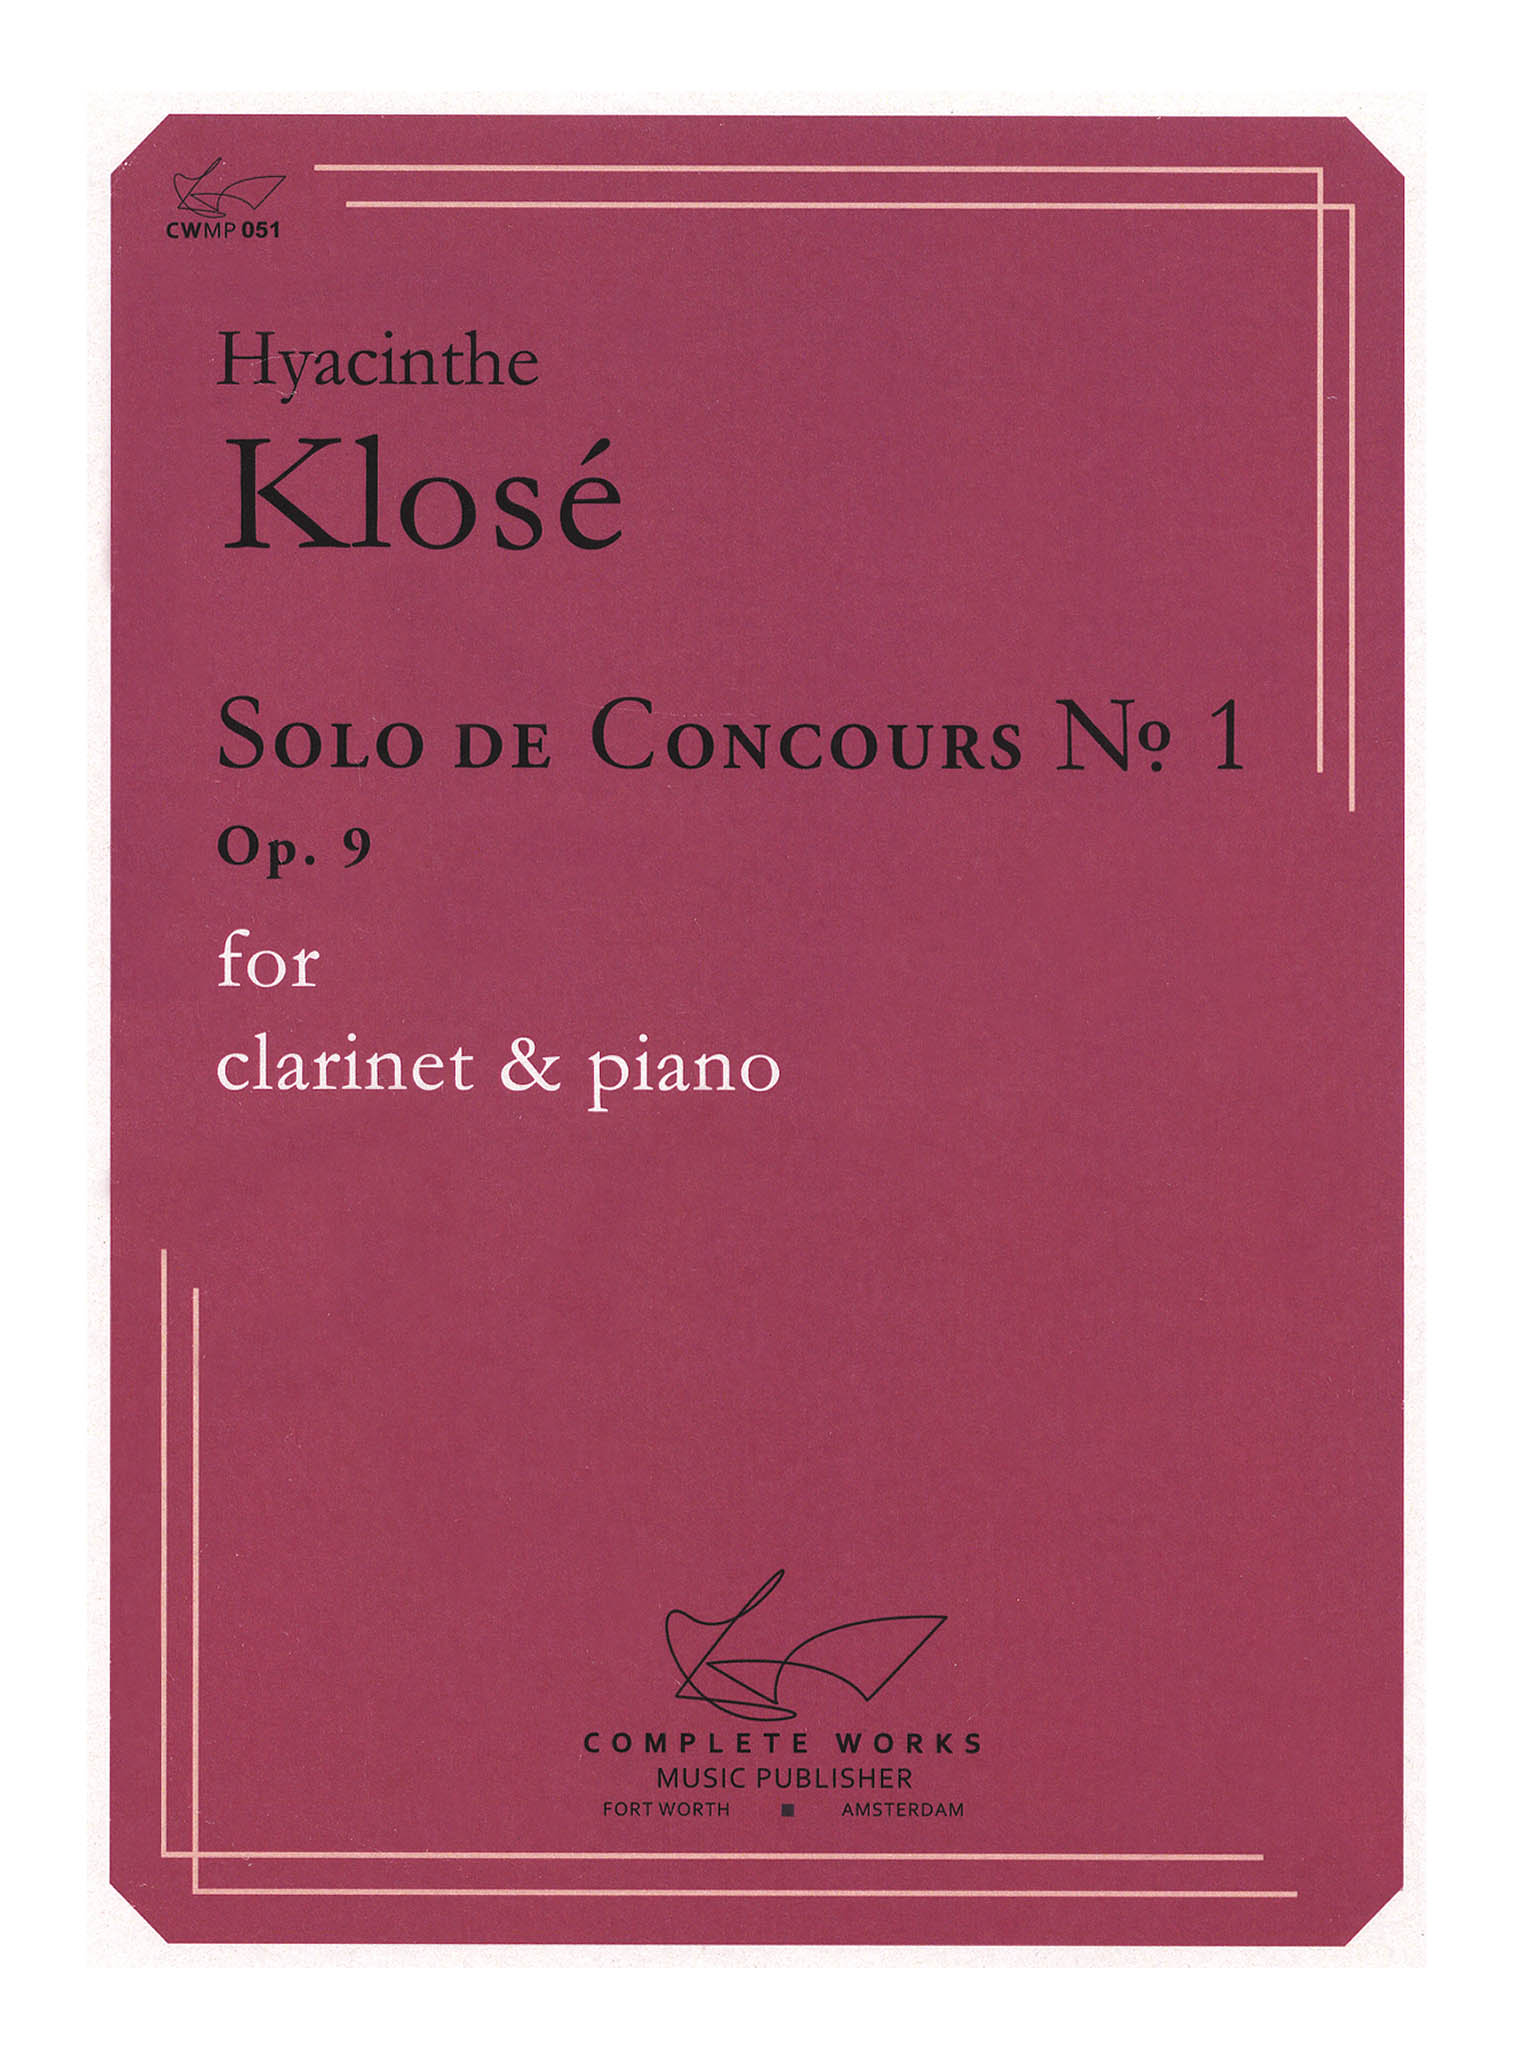 Klosé Solo de concours No. 1, Op. 9 clarinet and piano cover